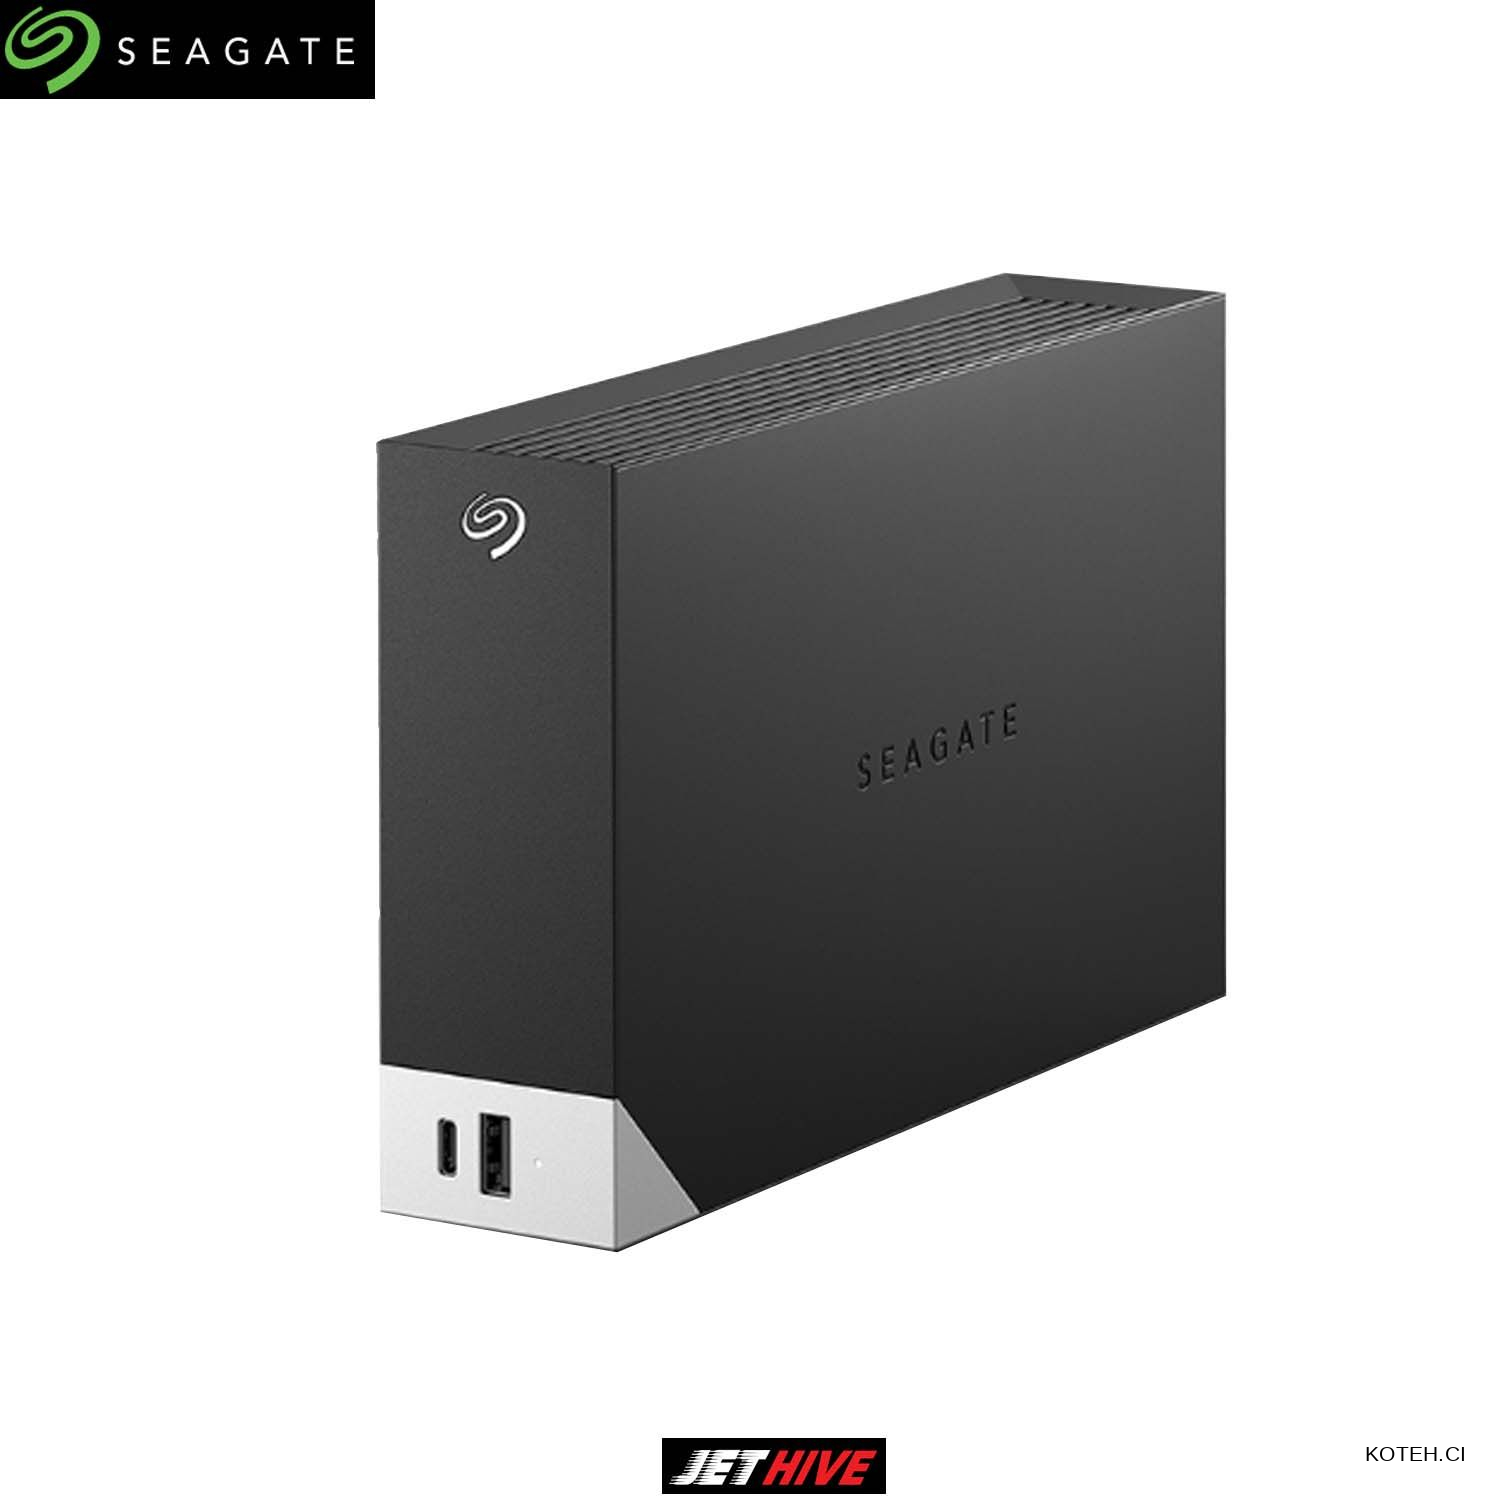 Seagate One Touch Desktop w HUB 6Tb HDD Black disque dur externe 6 To Noir